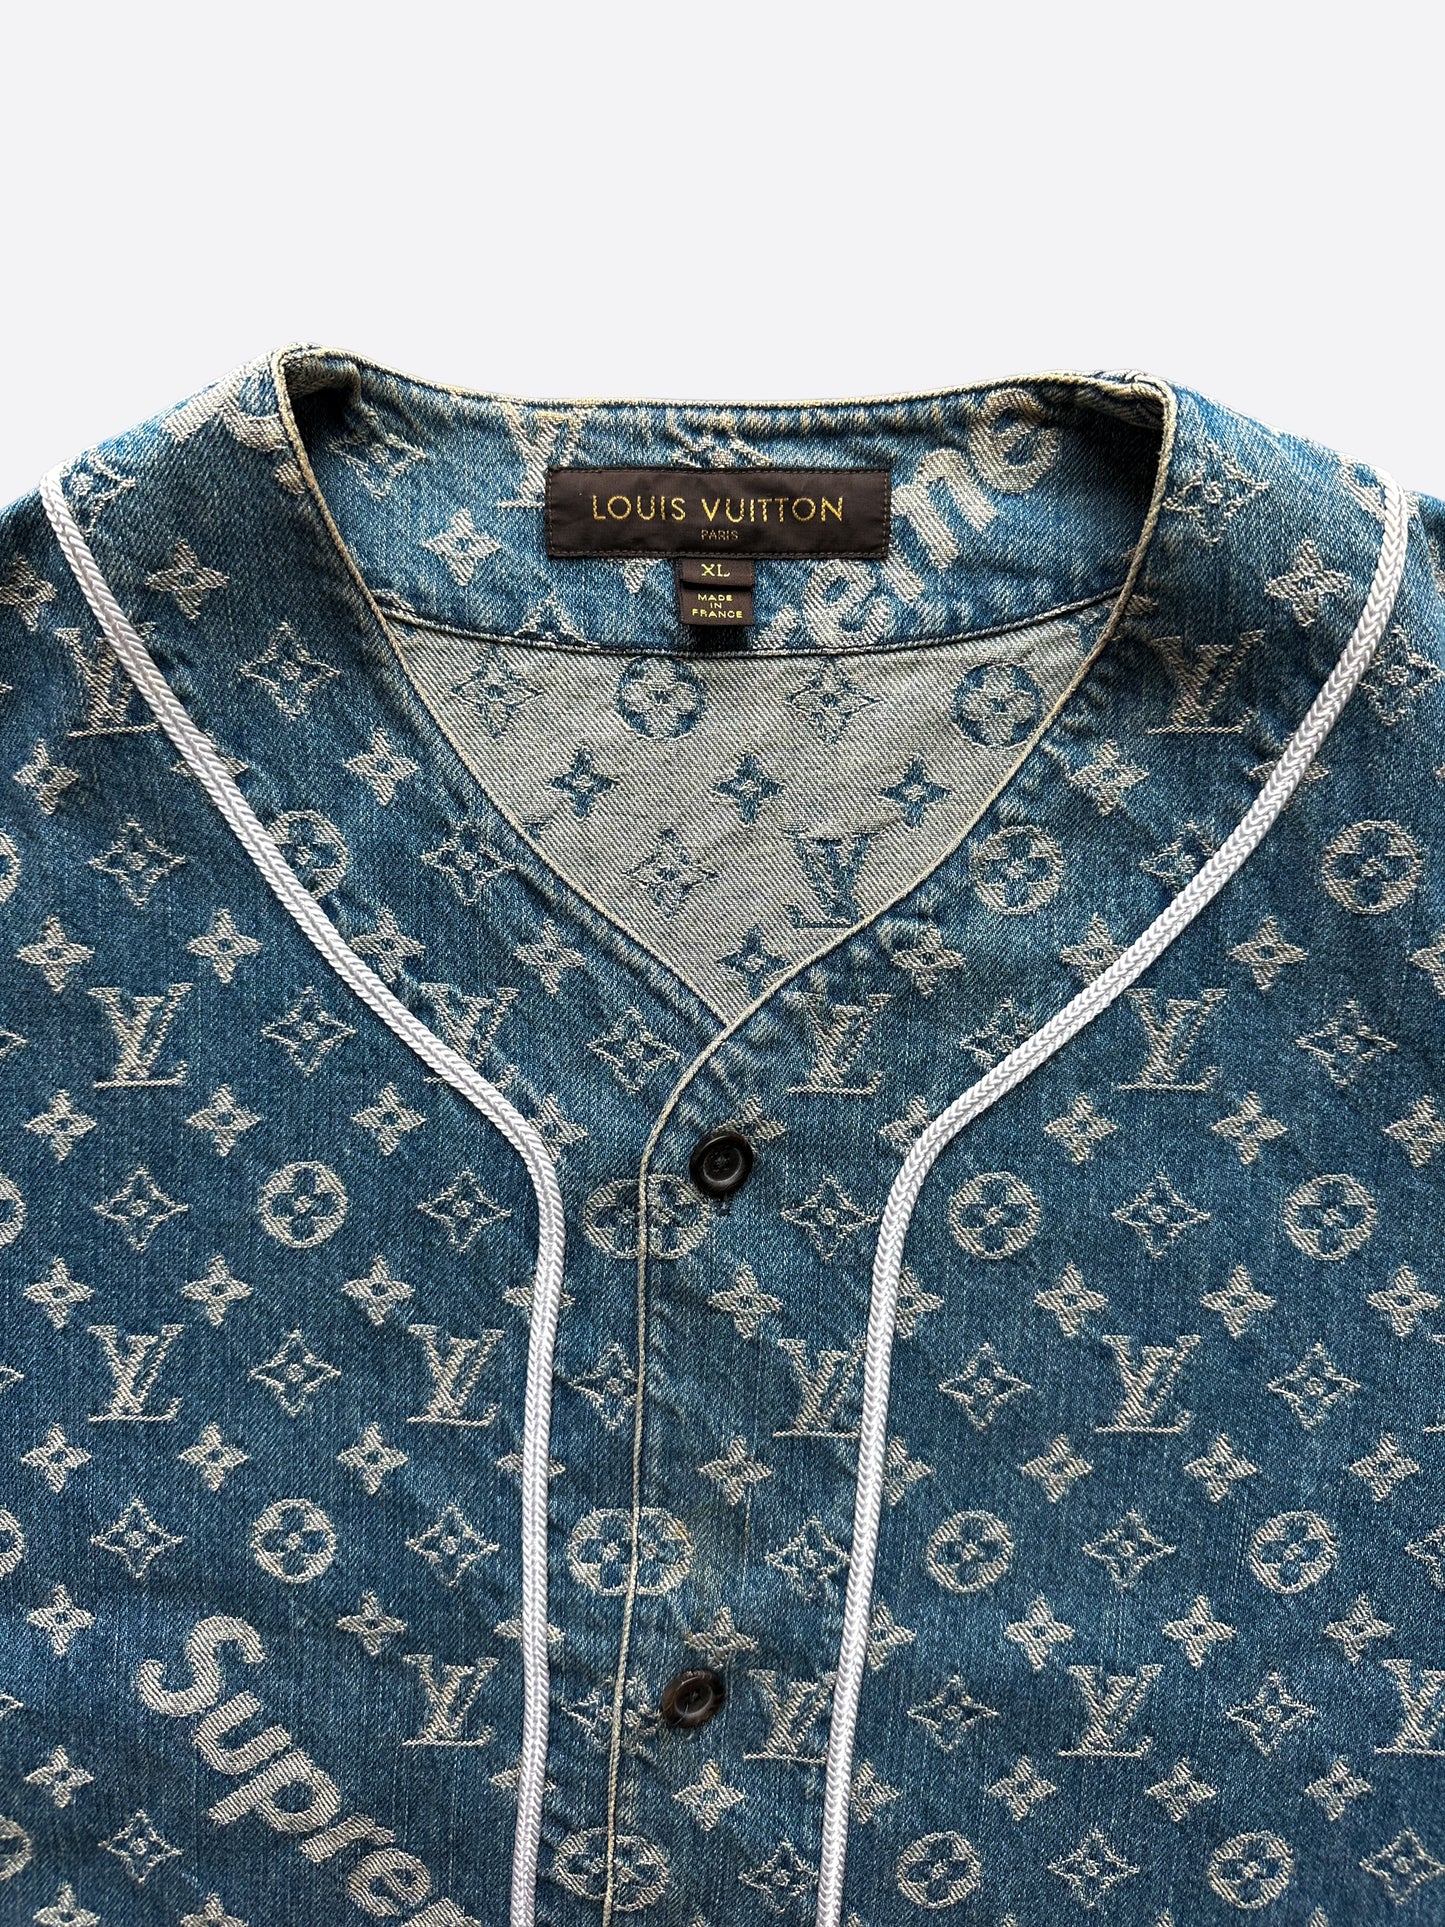 Olmom Store on LinkedIn: Buy Louis Vuitton Supreme Baseball Jersey